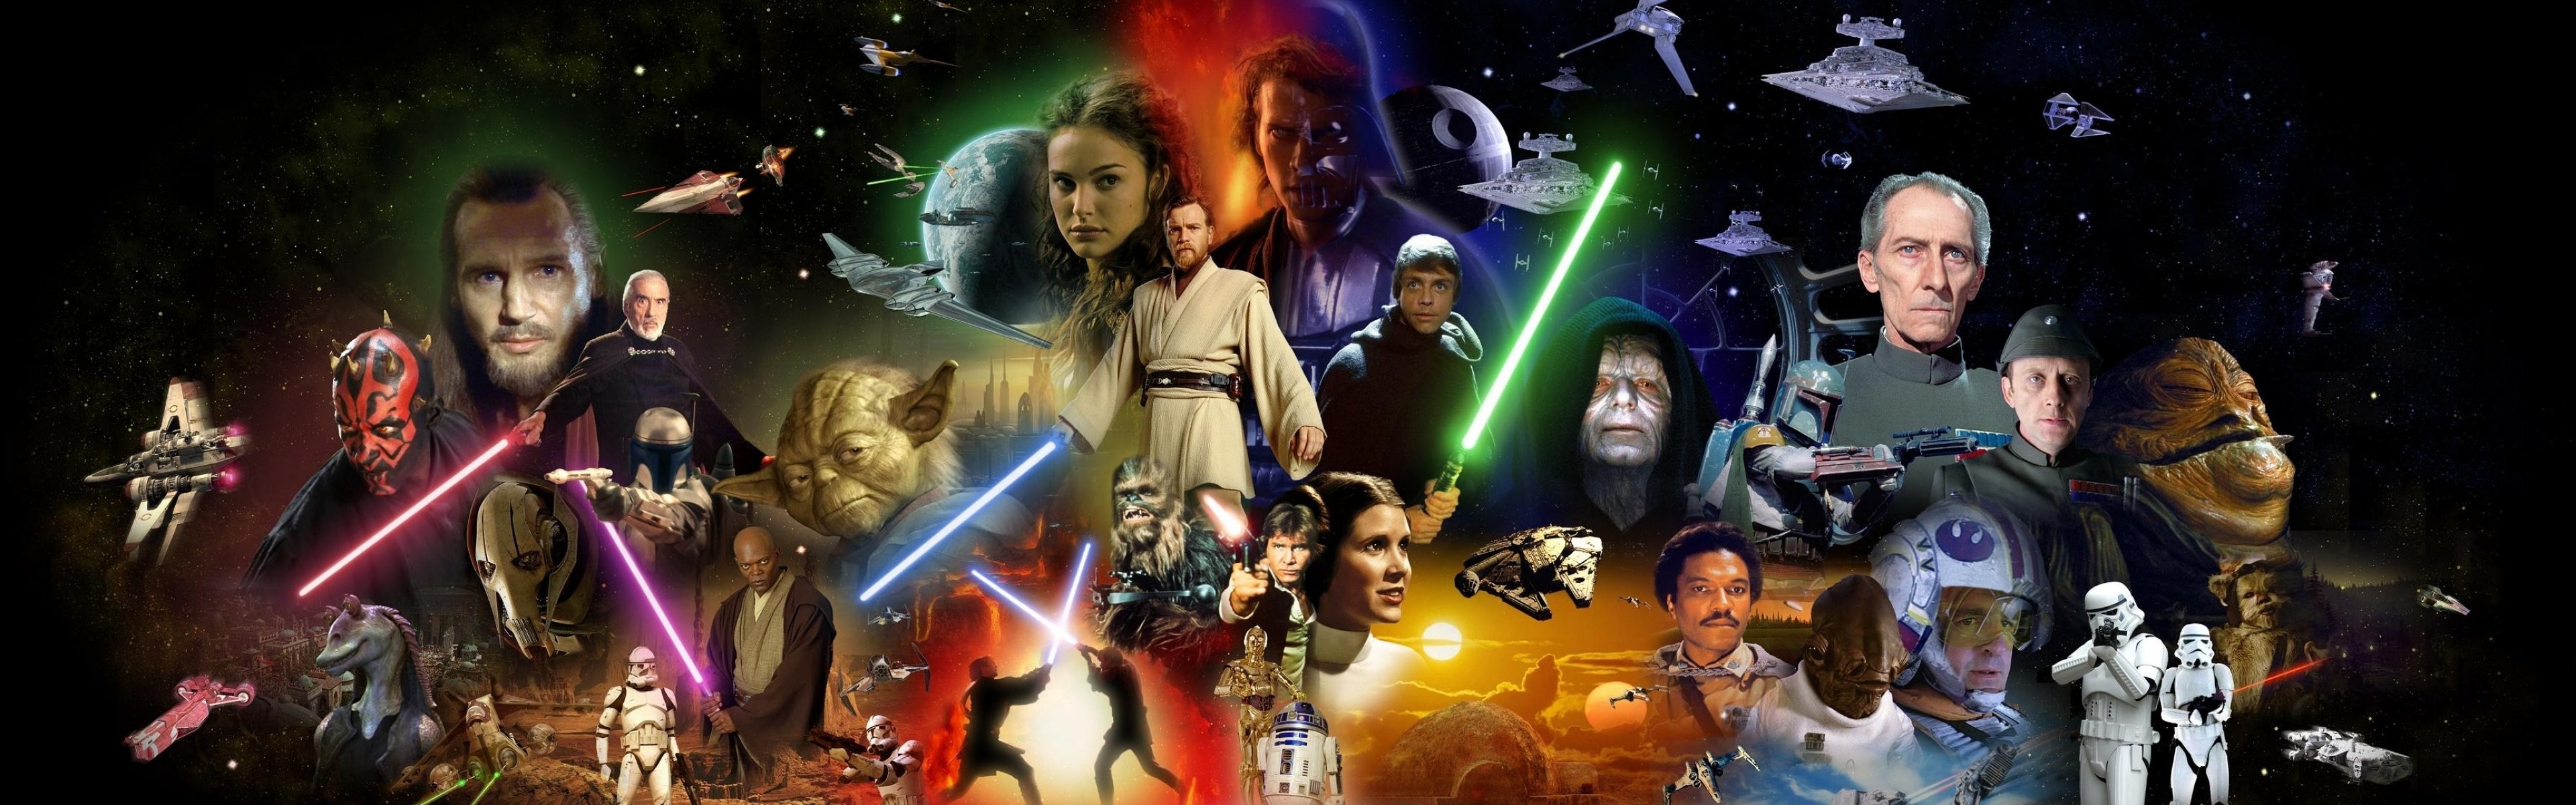 Triple Monitor Star Wars Wallpaper – WallpaperSafari | Epic Car Wallpapers  | Pinterest | Star wars wallpaper and Wallpaper